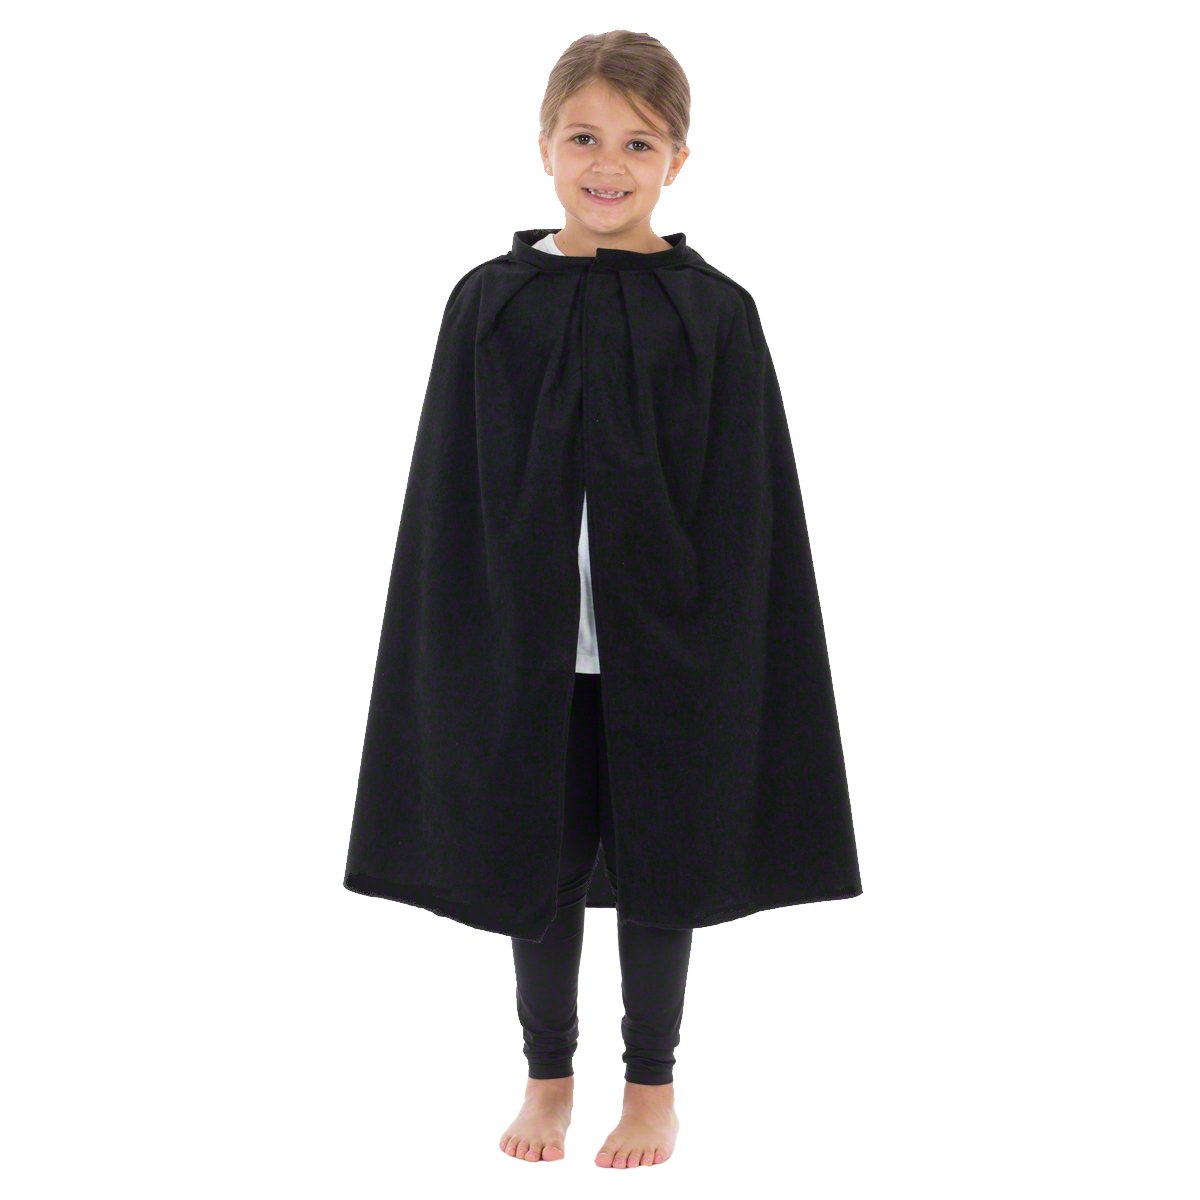 black cape fancy dress child